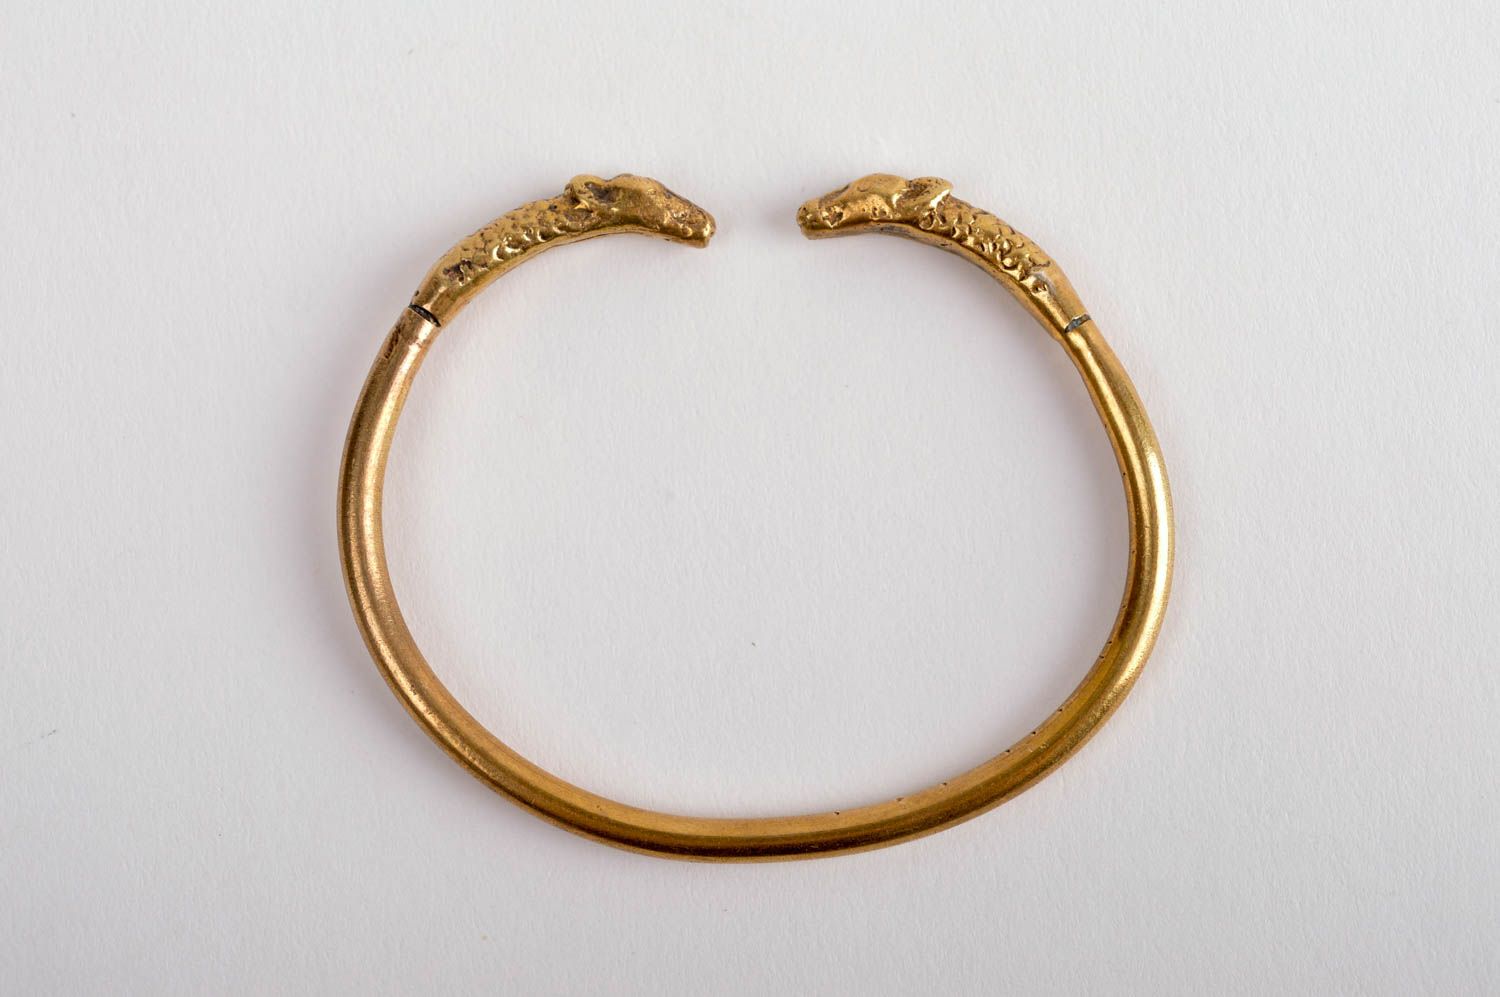 Beautiful handmade wrist bracelet designs metal jewelry best gifts for her photo 2